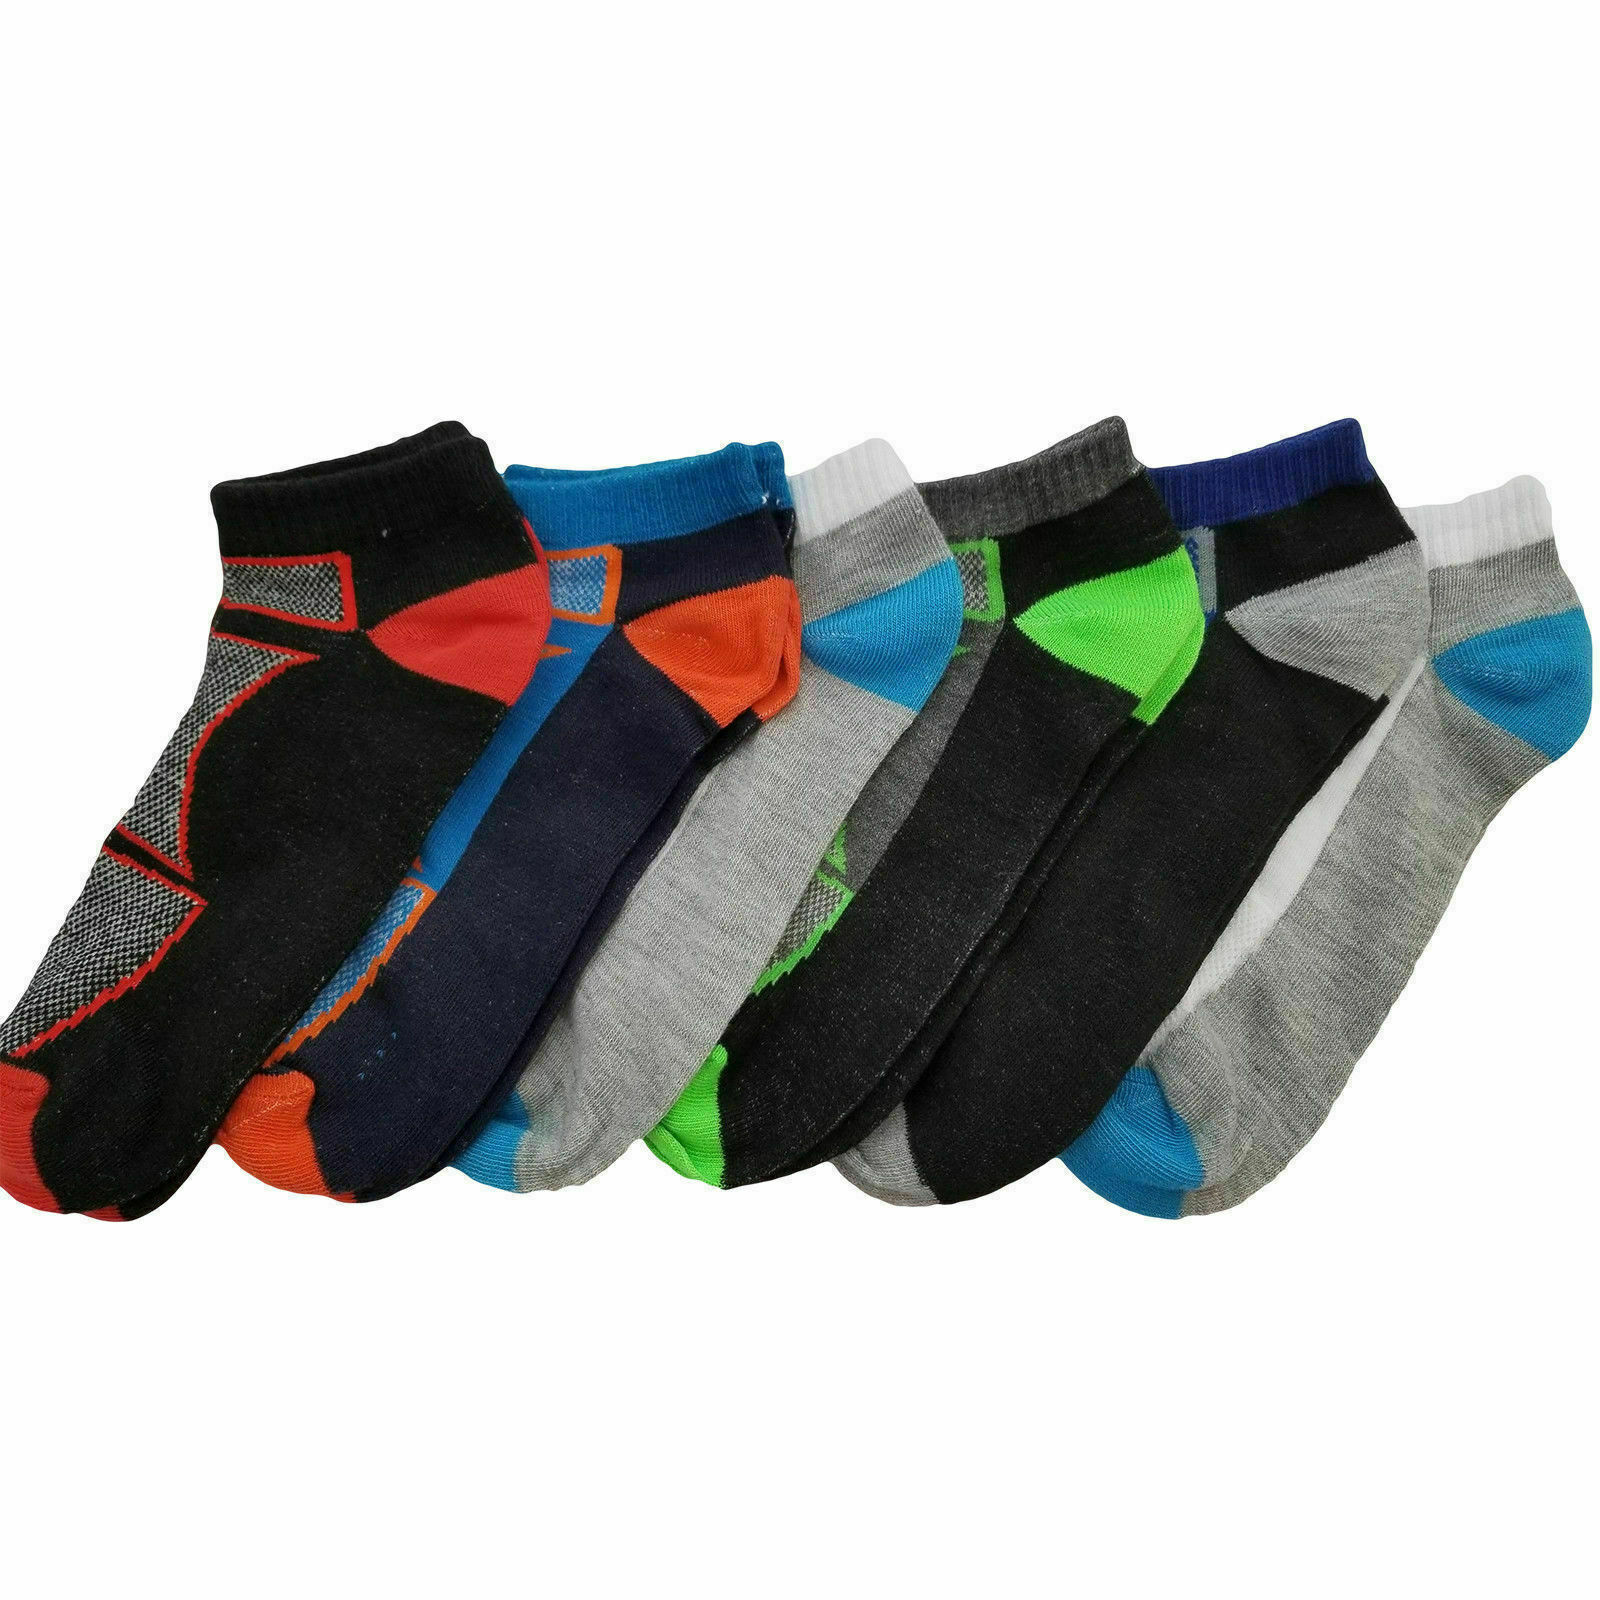 6 Pairs Option 1 Quarter Ankle Socks Men Women Trainer Sports Cotton Liner Uk Size 6-11